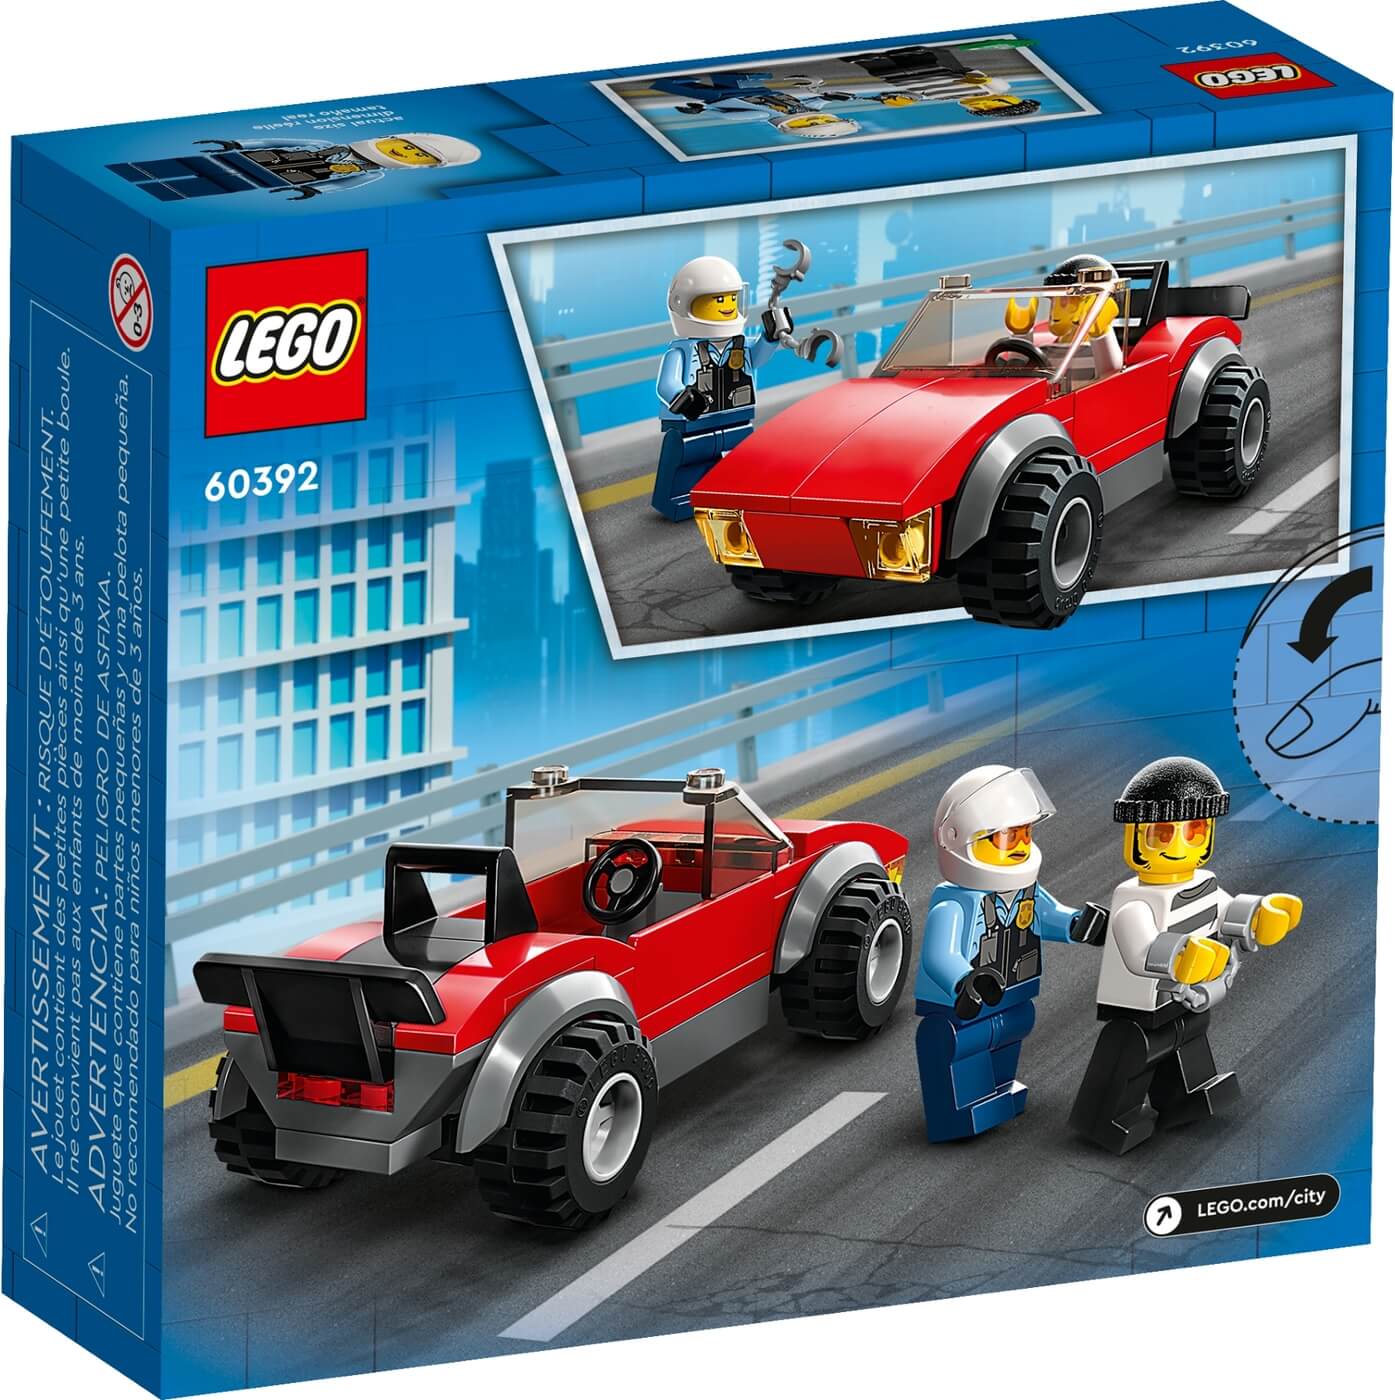 Moto Policia y Coche a la Fuga ( Lego 60392 ) imagen e